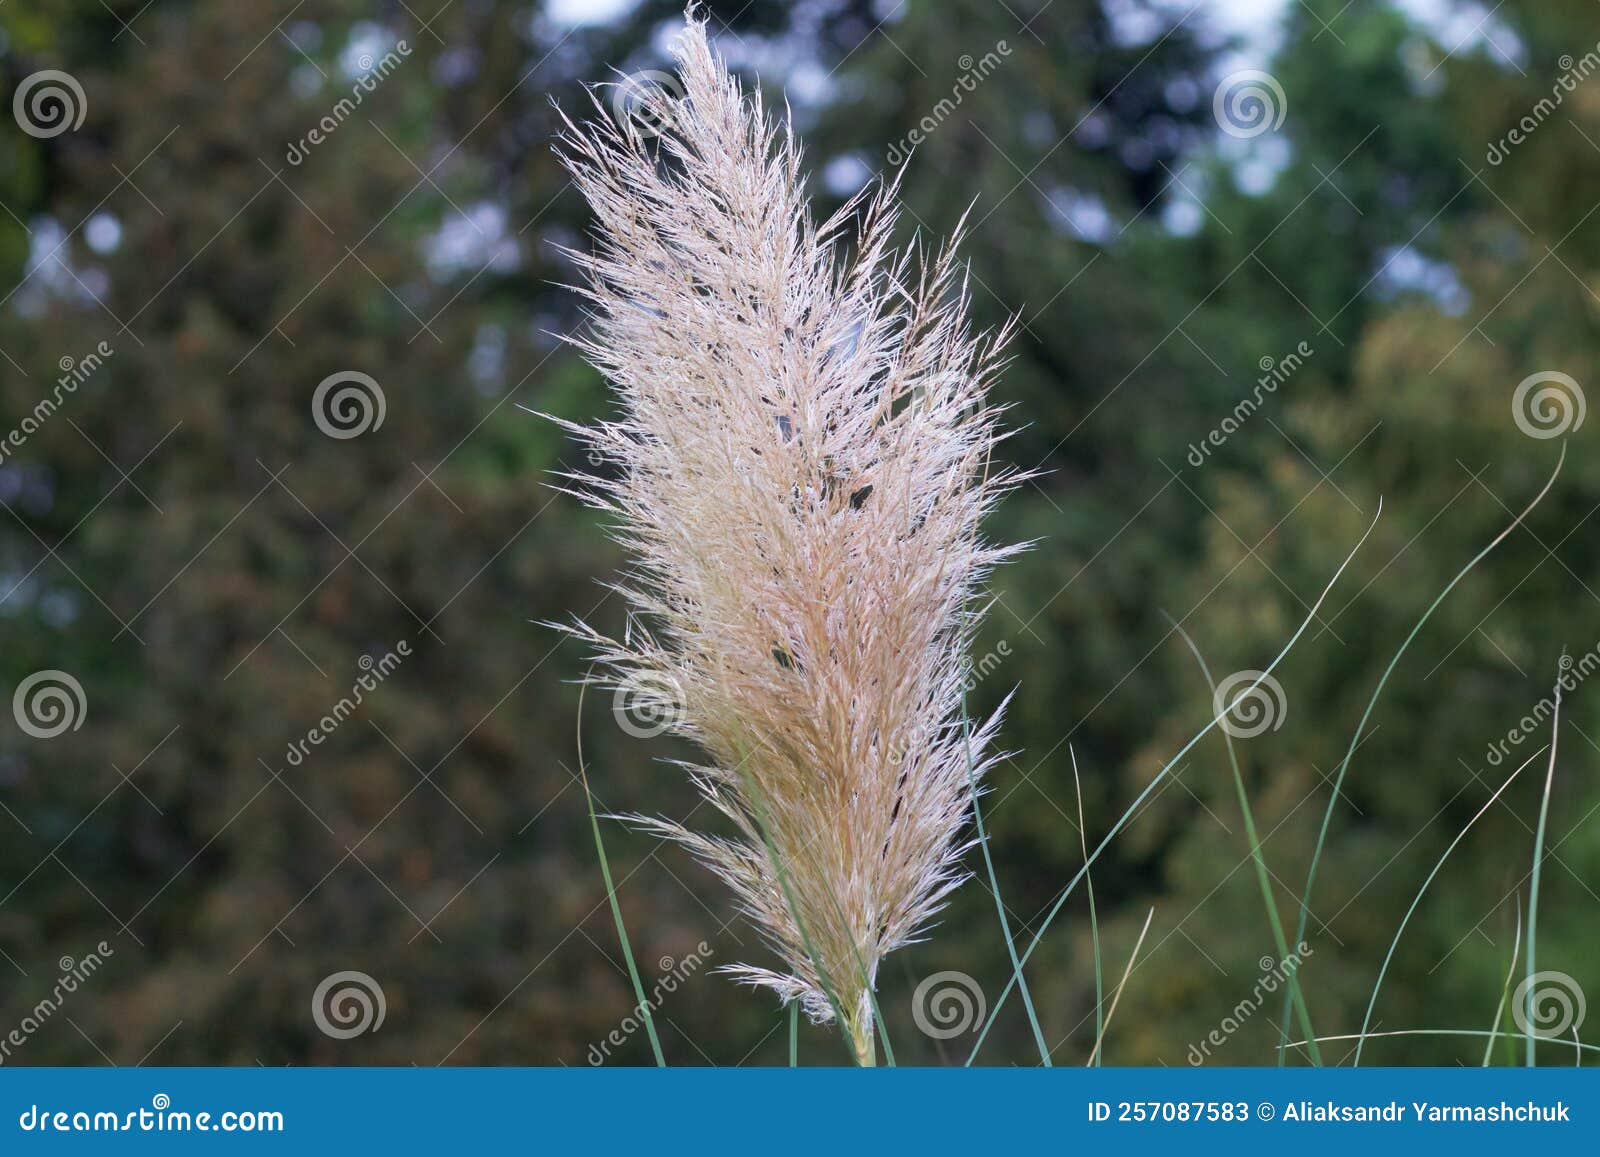 pampas grass, or cortaderia sello, or cortaderia dioecious (latin cortaderia selloana)